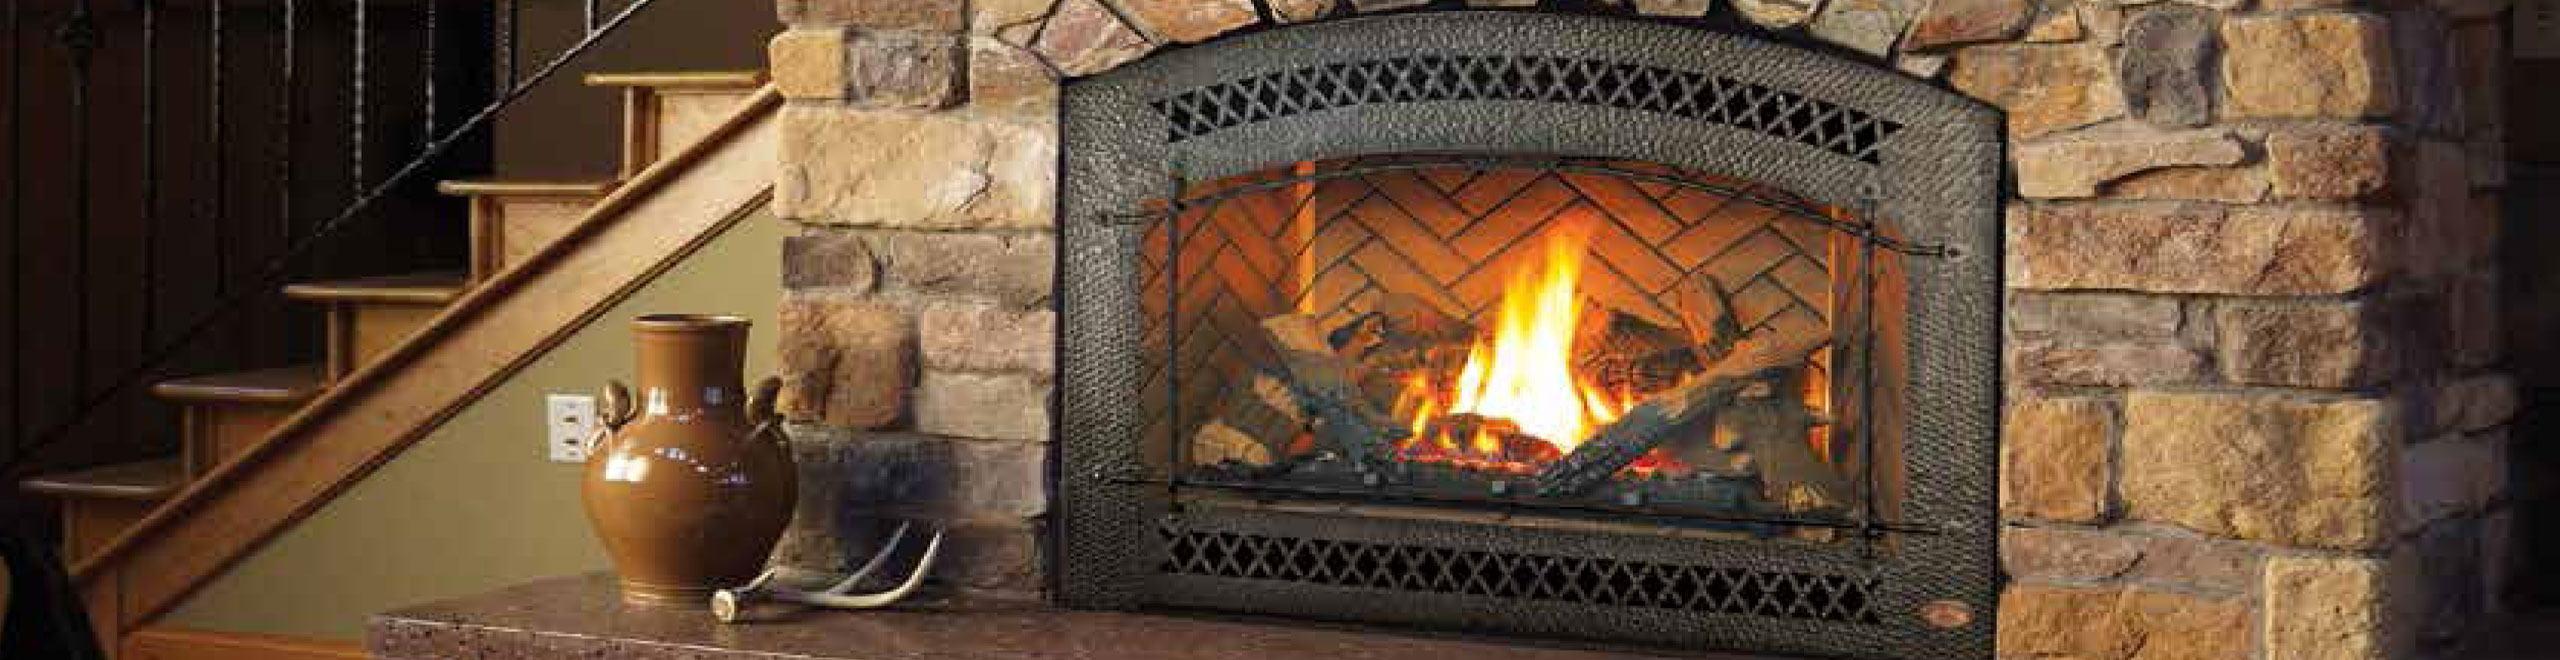 Archgard Fireplace New Chunwan Cream Fireplaces Winter Honeymoon